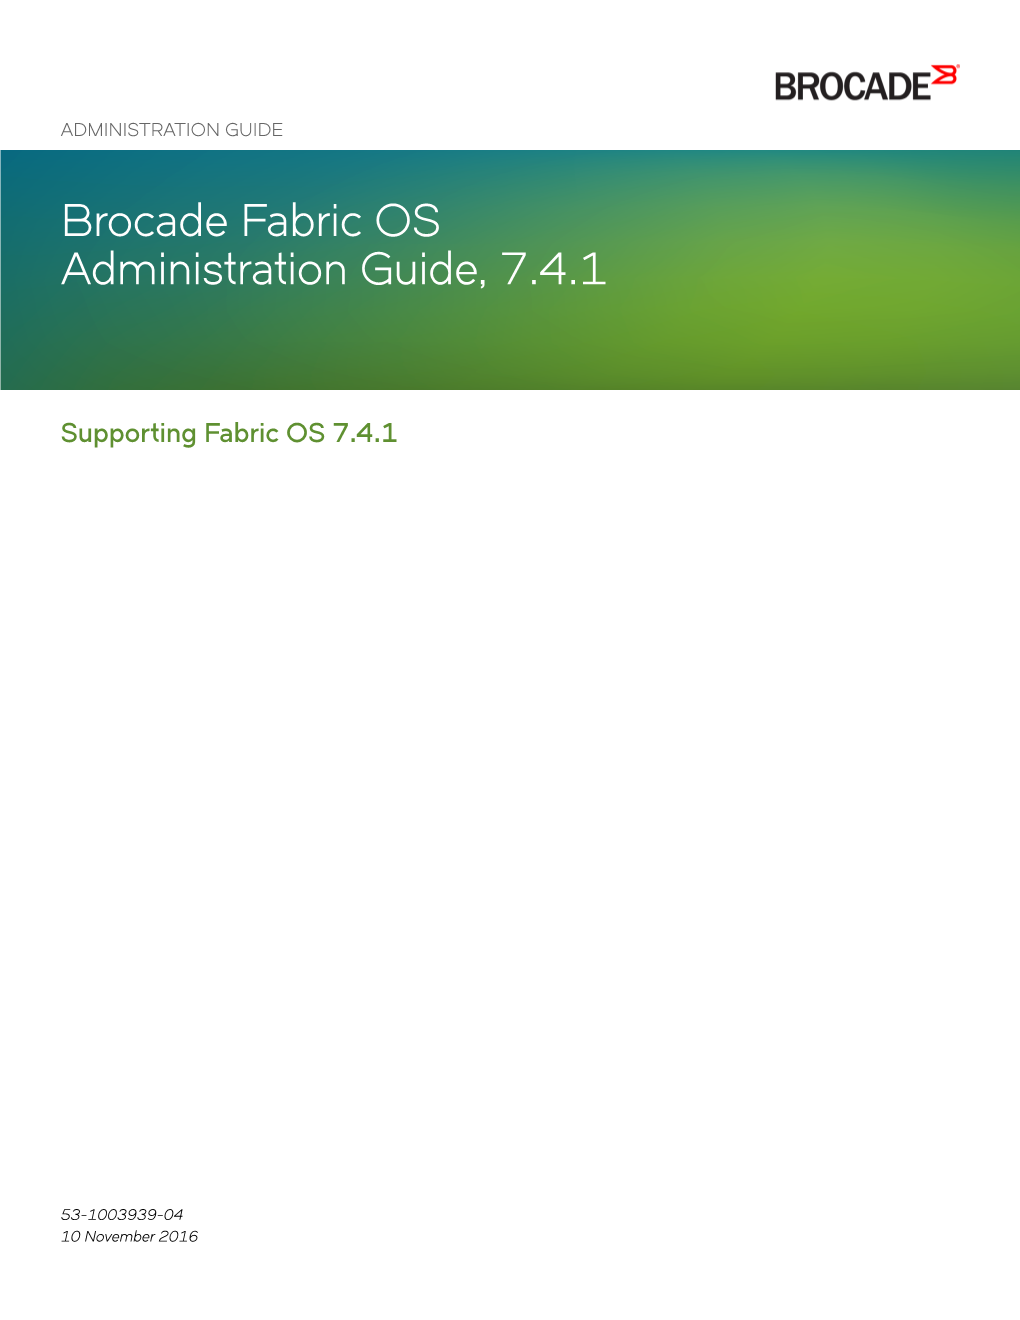 Brocade Fabric OS Administration Guide, 7.4.1